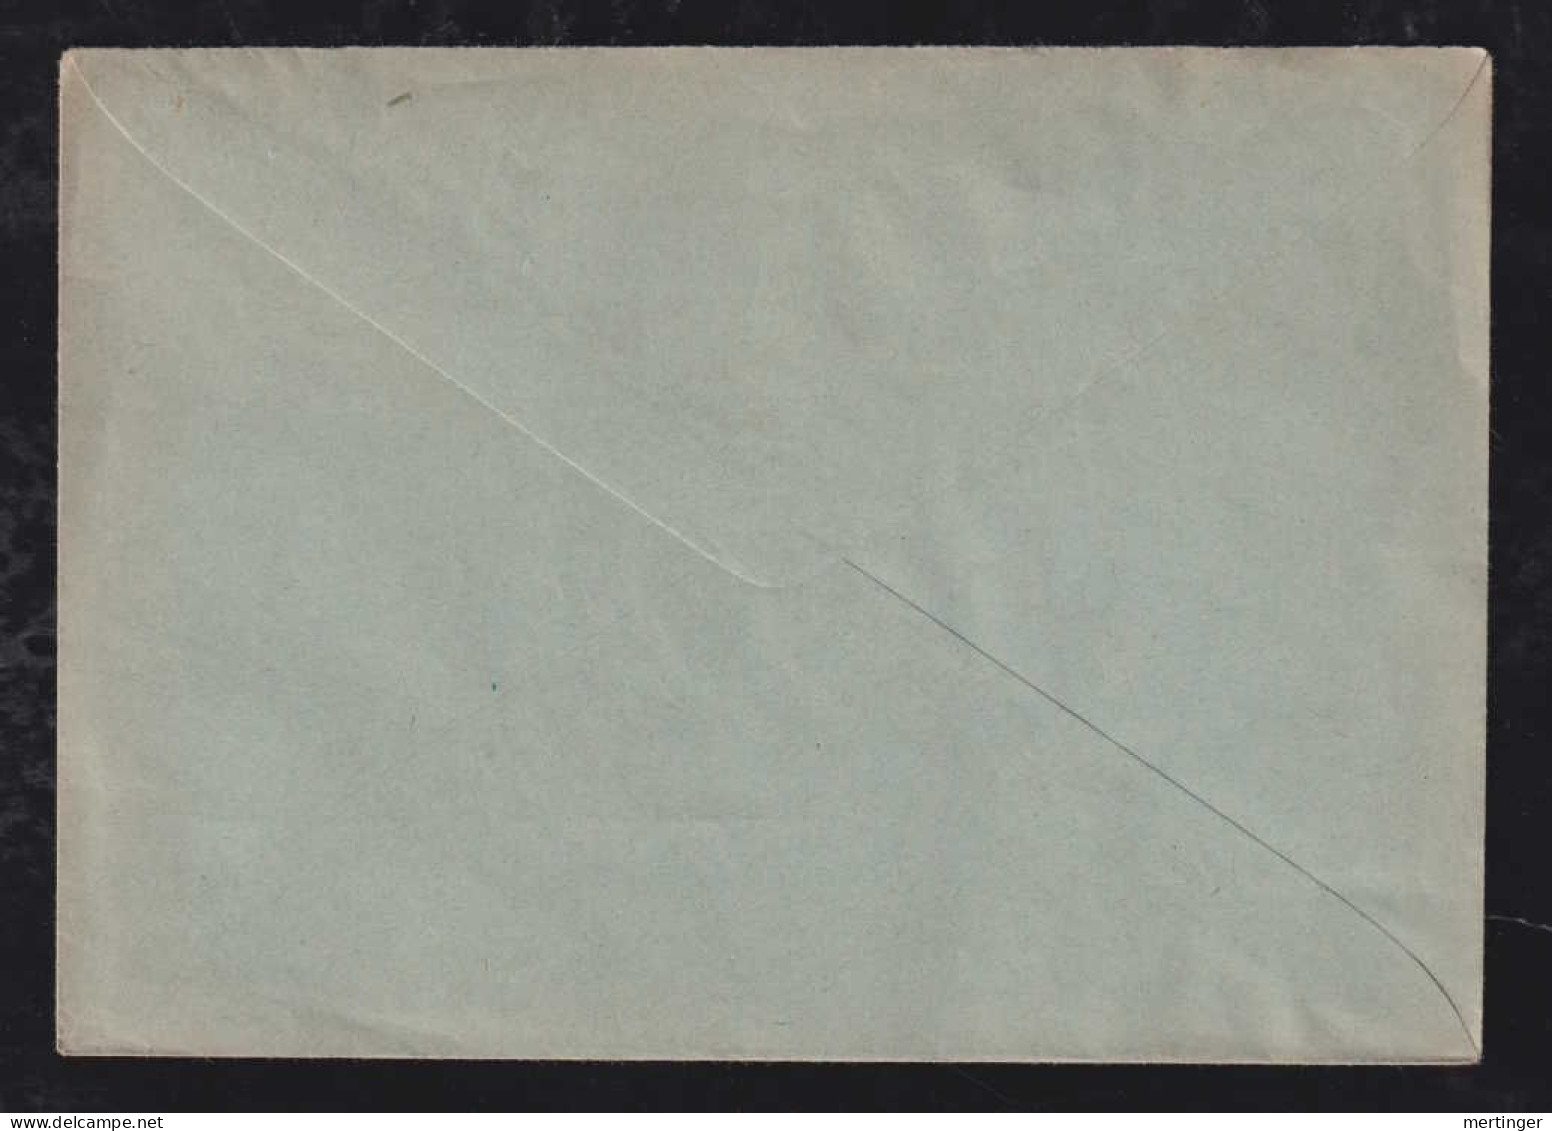 Saarland Saar 1951 Brief Postsache SAARBRÜCKEN X NOHFELDEN - Lettres & Documents